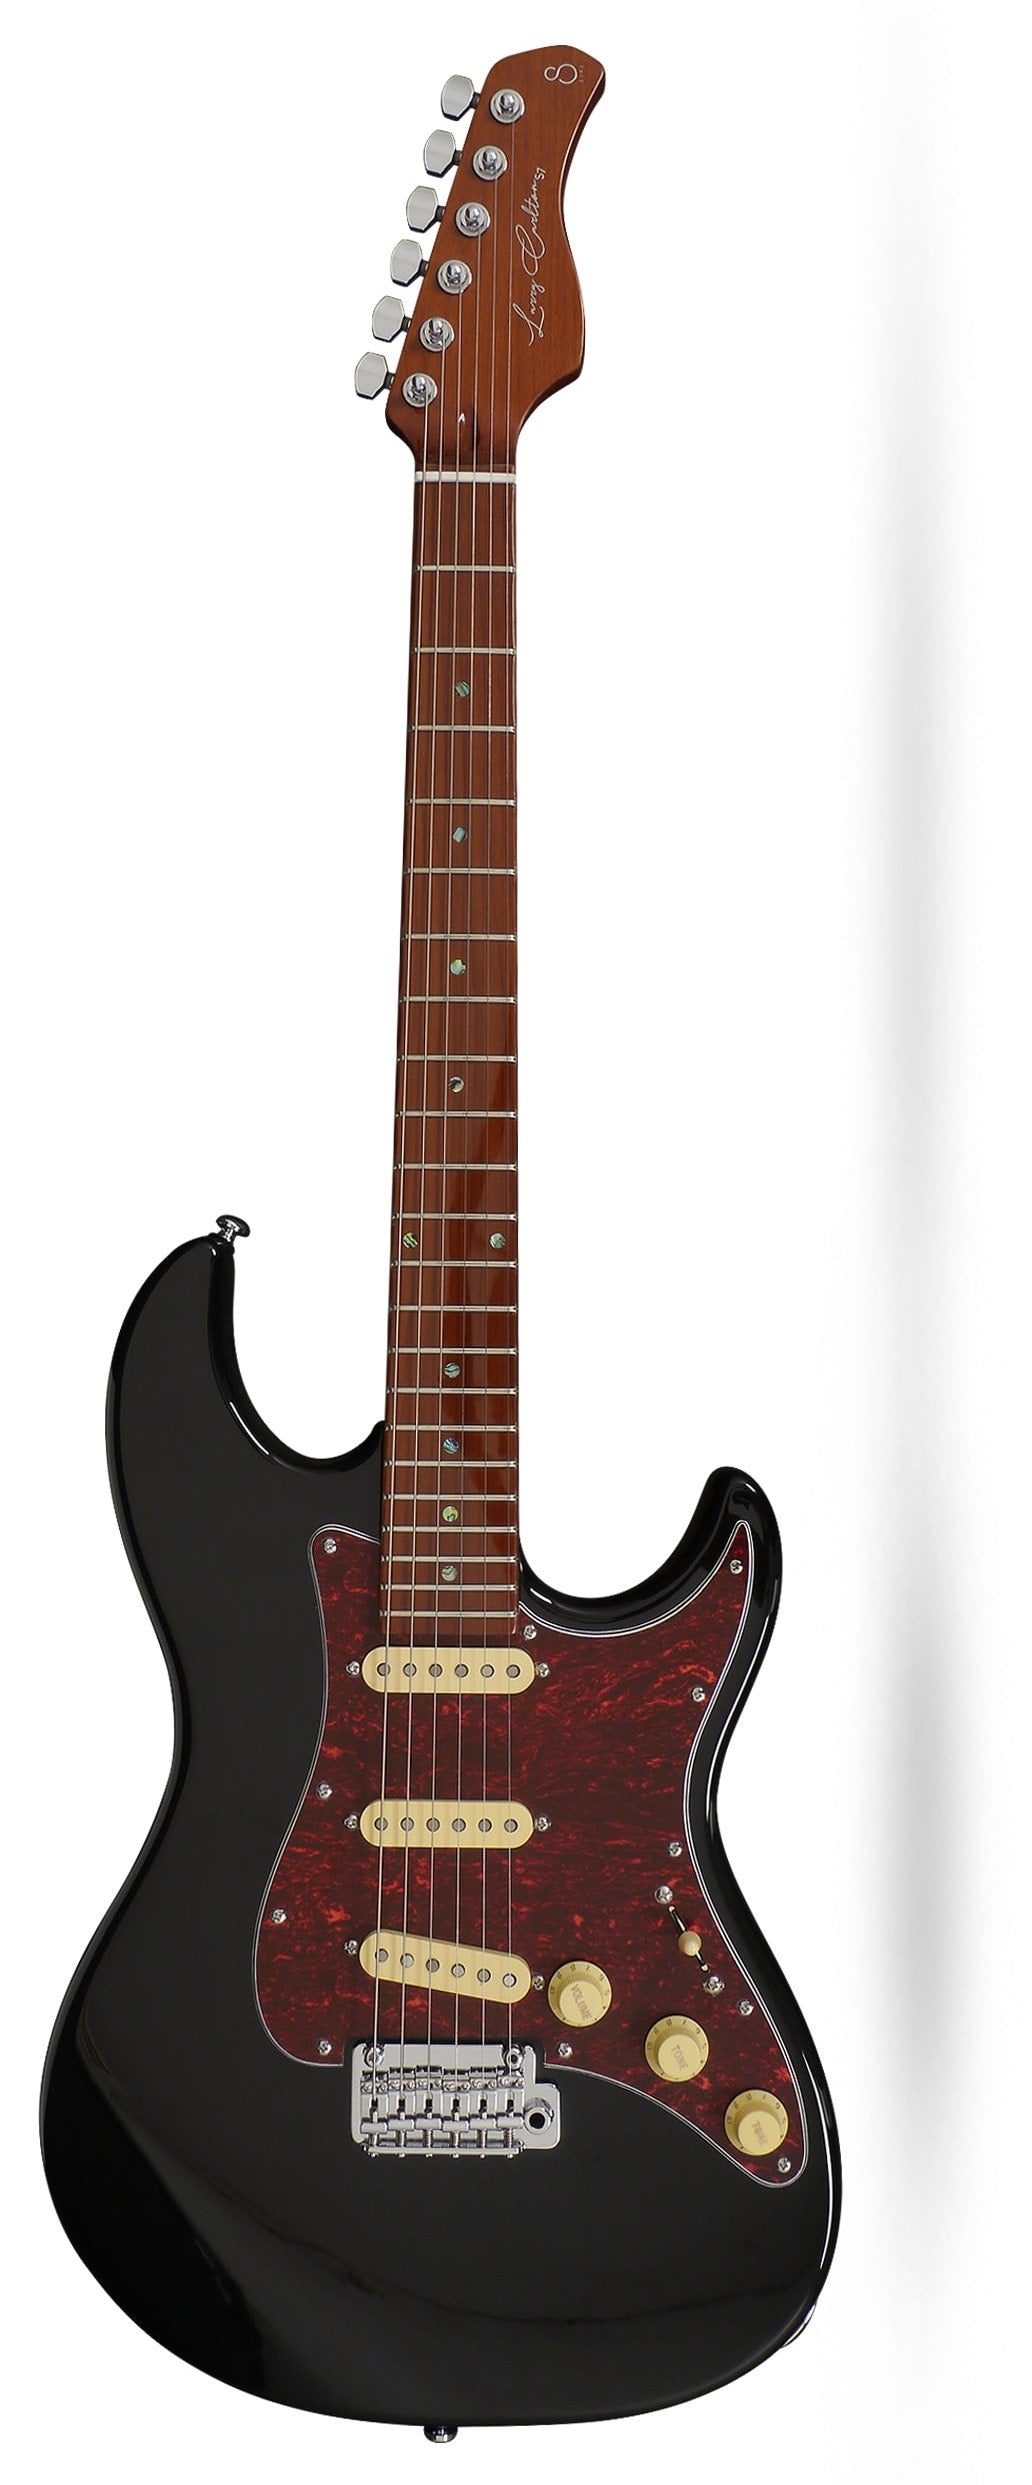 Sire Larry Carlton S7 Vintage Sire Electric Guitar - Black